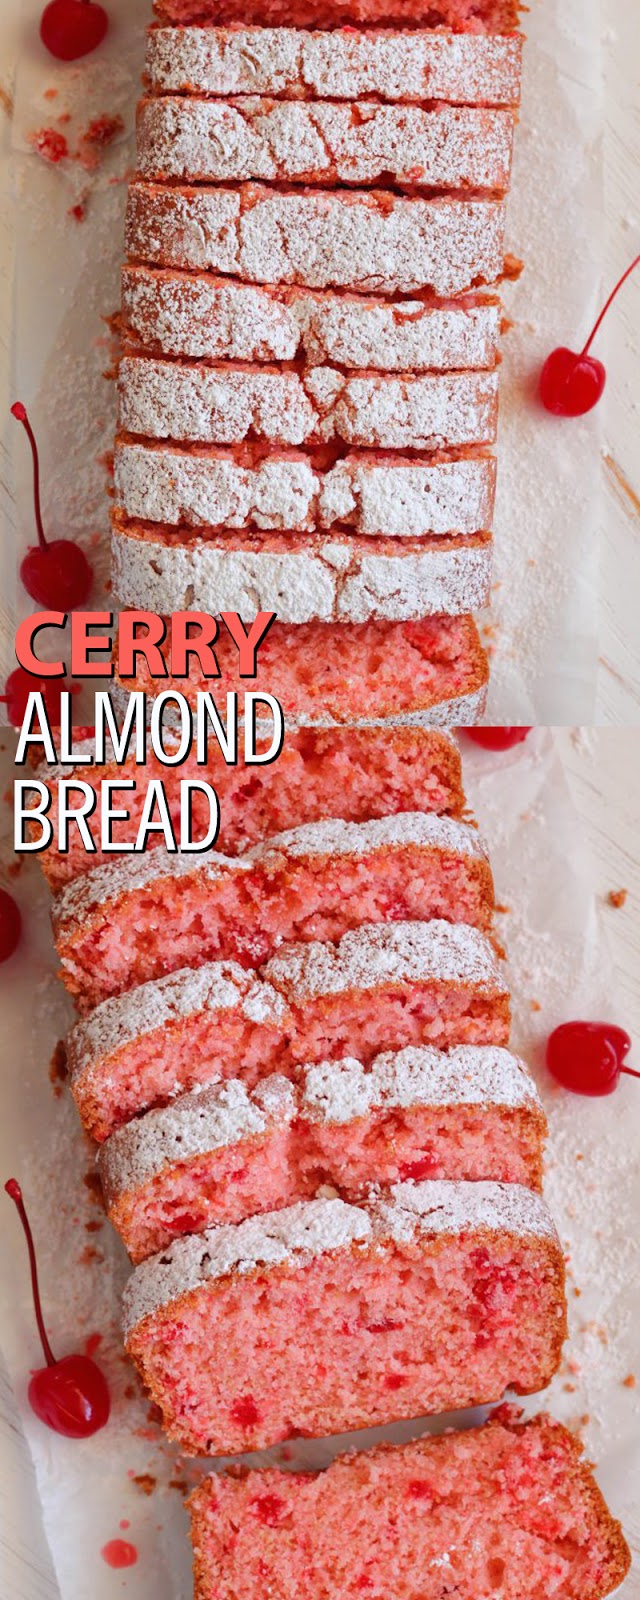 CHERRY ALMOND BREAD